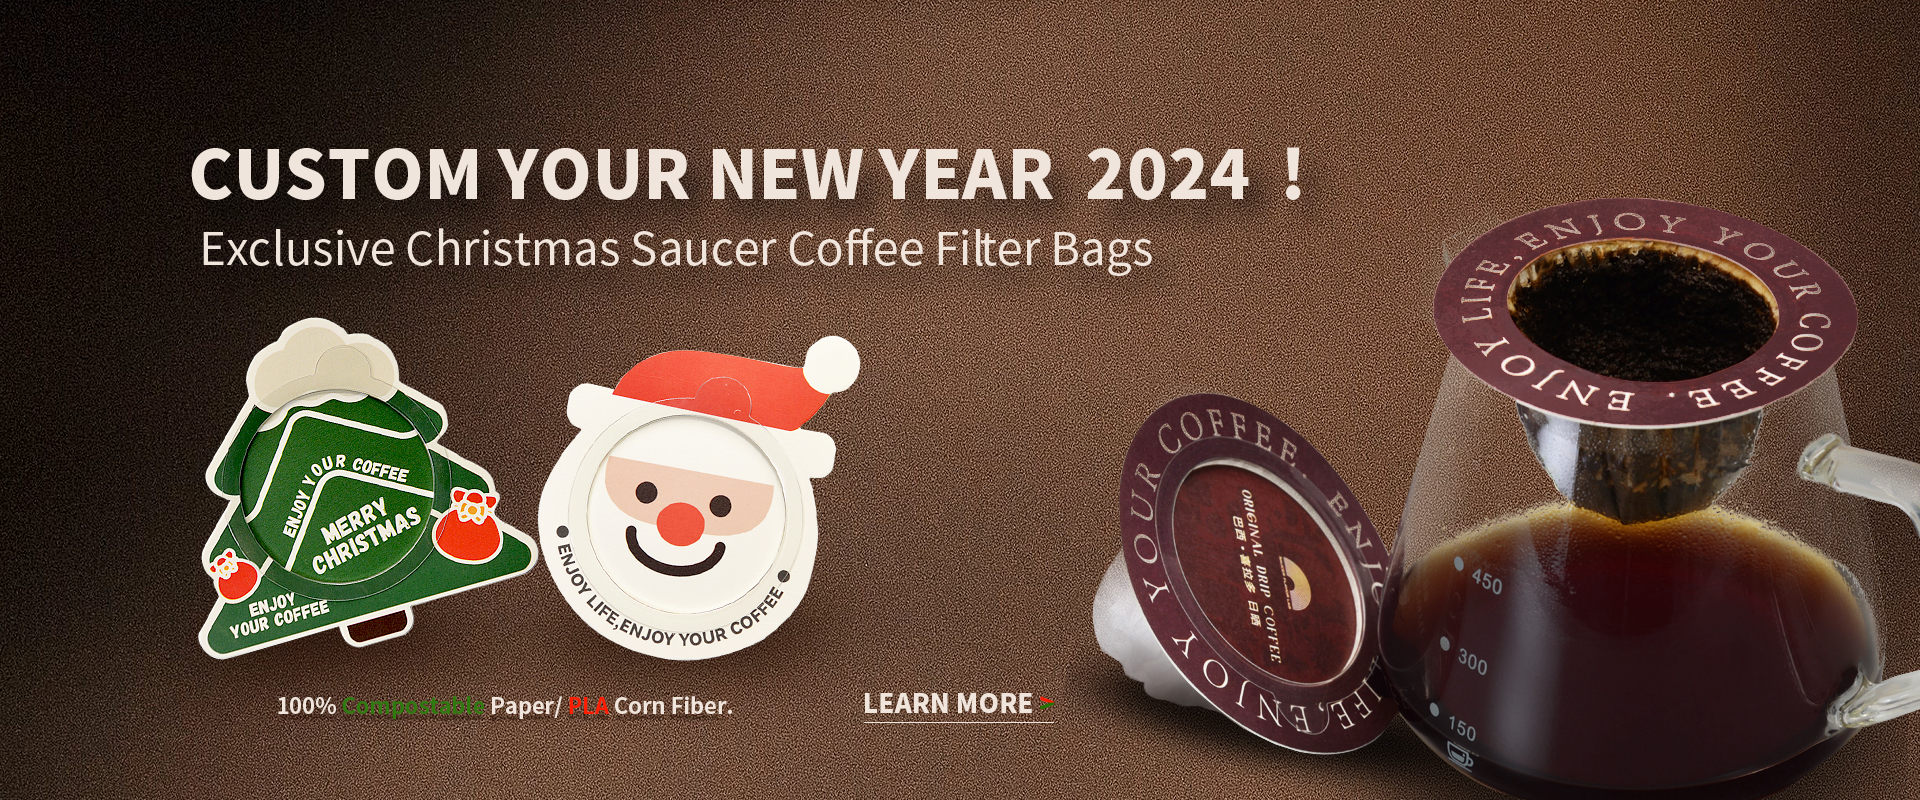 https://www.coffeeteabag.com/chritmas-fedora-eco-friendly-saucer-drip-coffee-filter-bag-product/